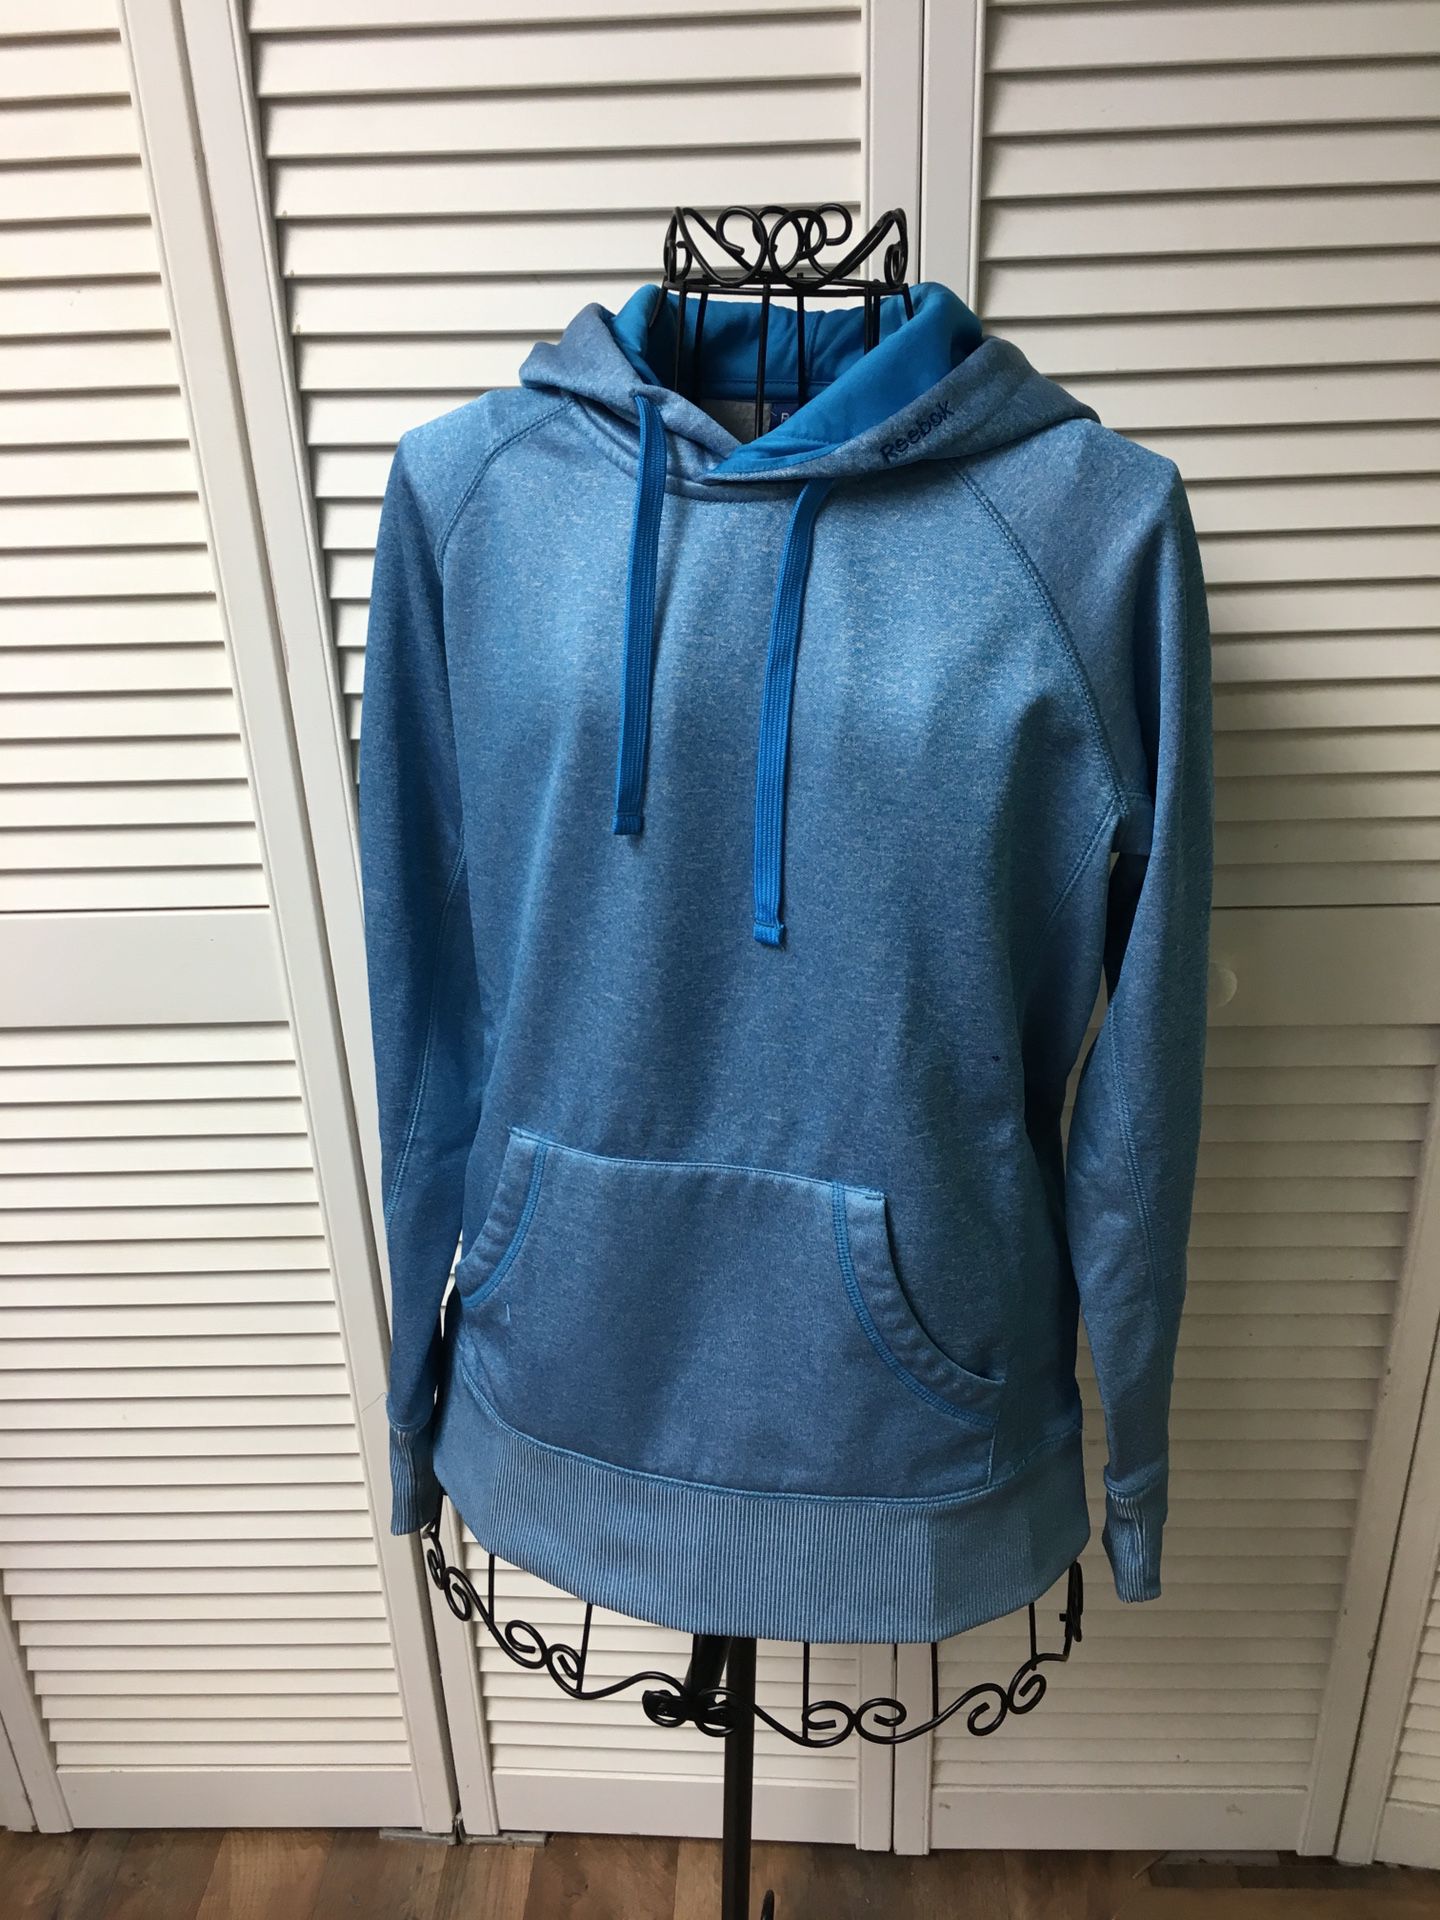 Reebok, Women’s size small, blue athletic hoodie